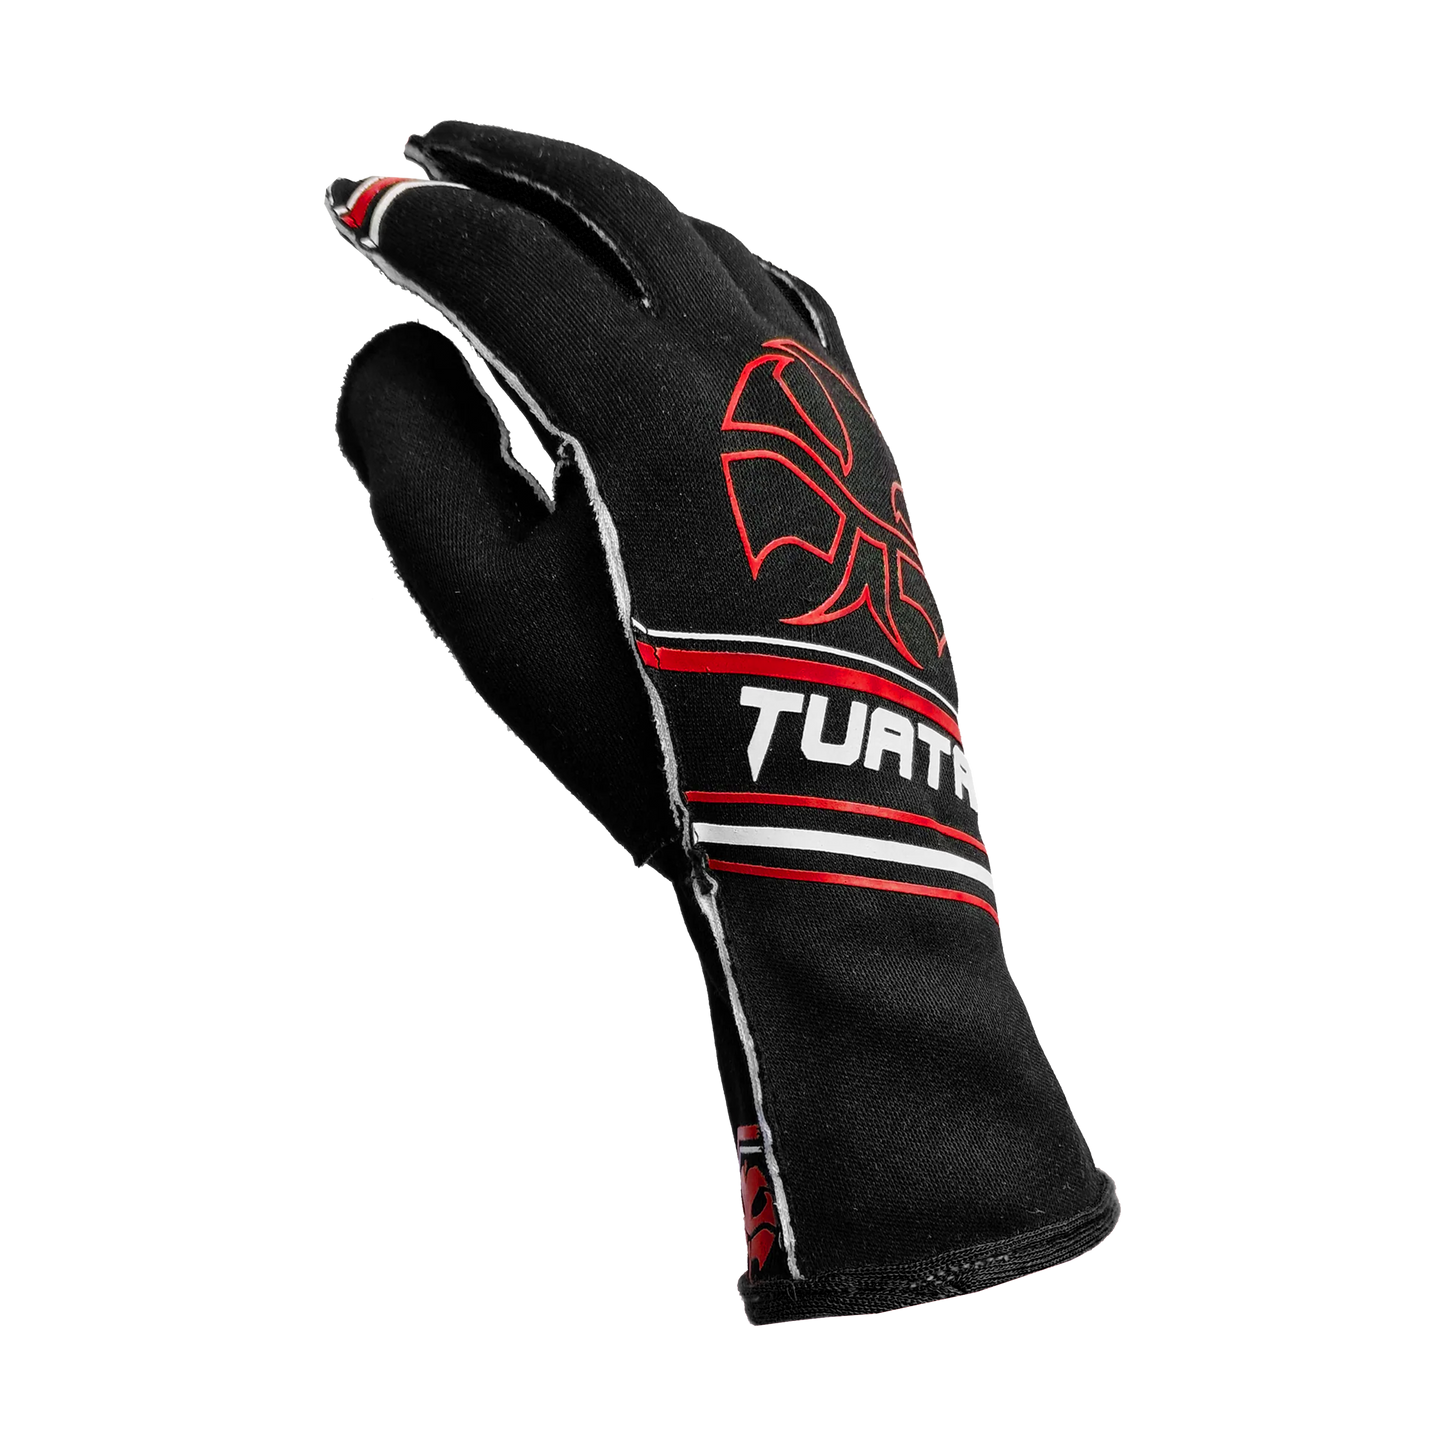 Ultimate Race Handschuhe – Ultra Grip – DOMINATOR – BLK/RD